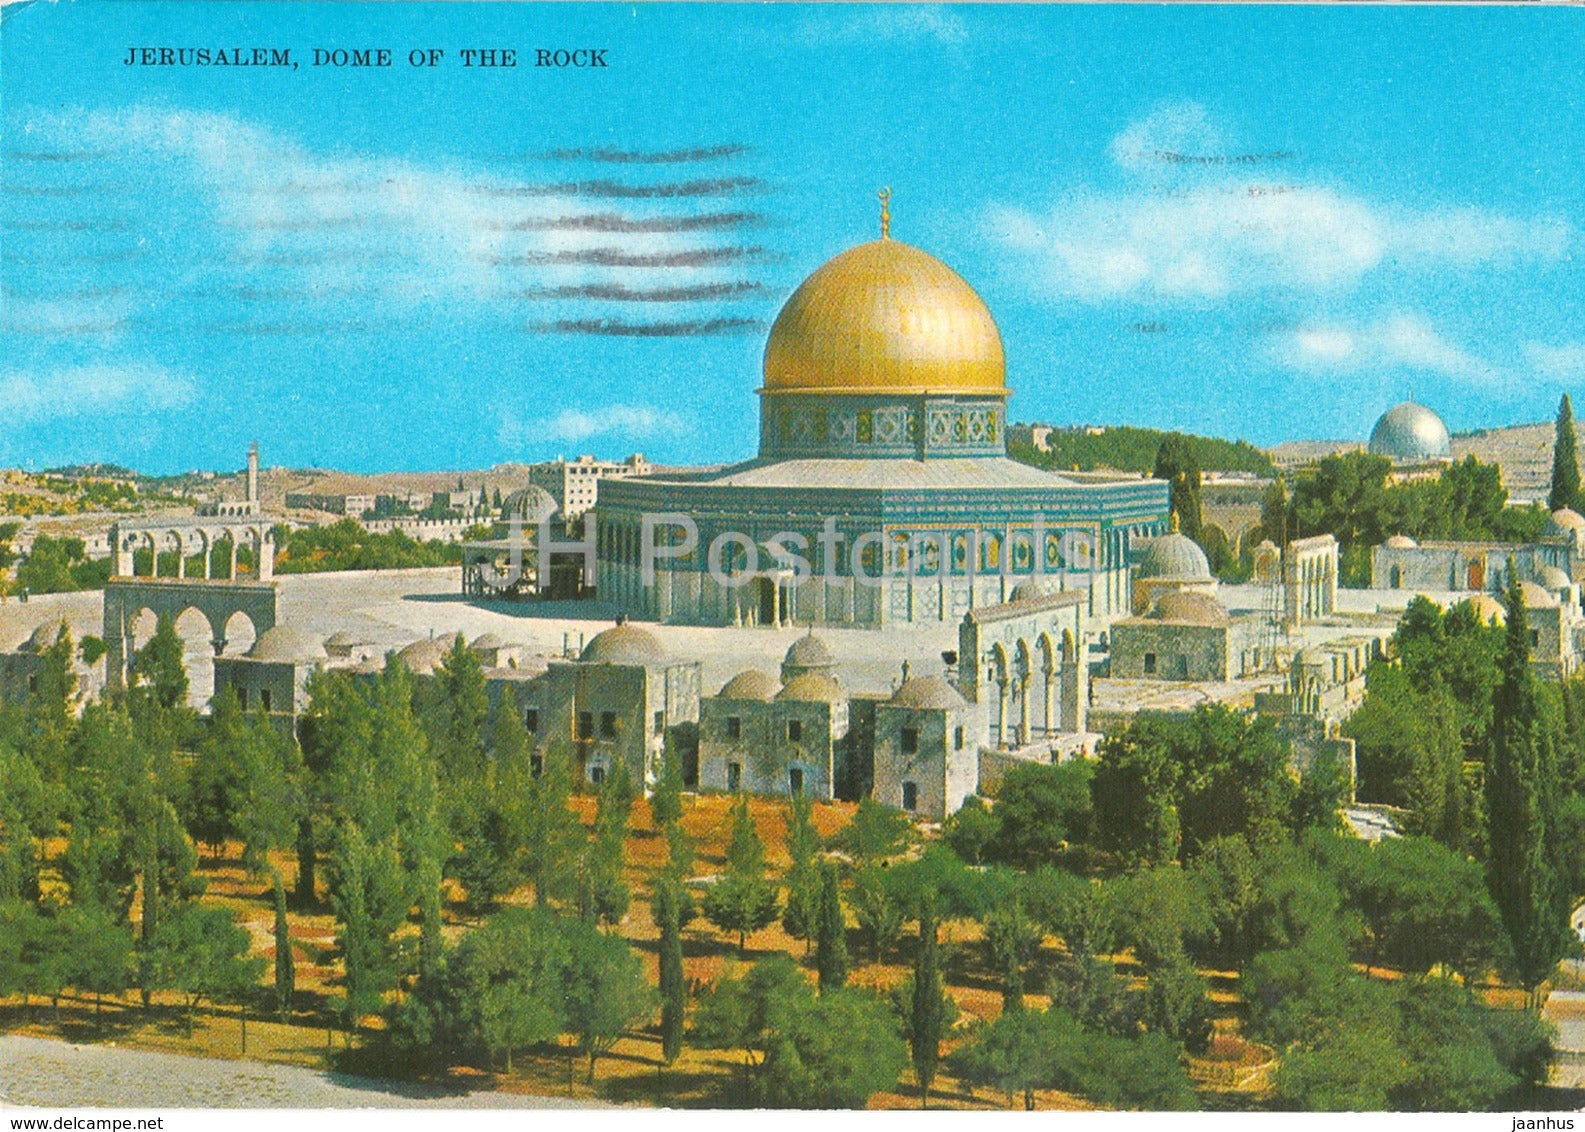 Jerusalem - Dome of the Rock - 8338 - 1971 - Israel - used - JH Postcards